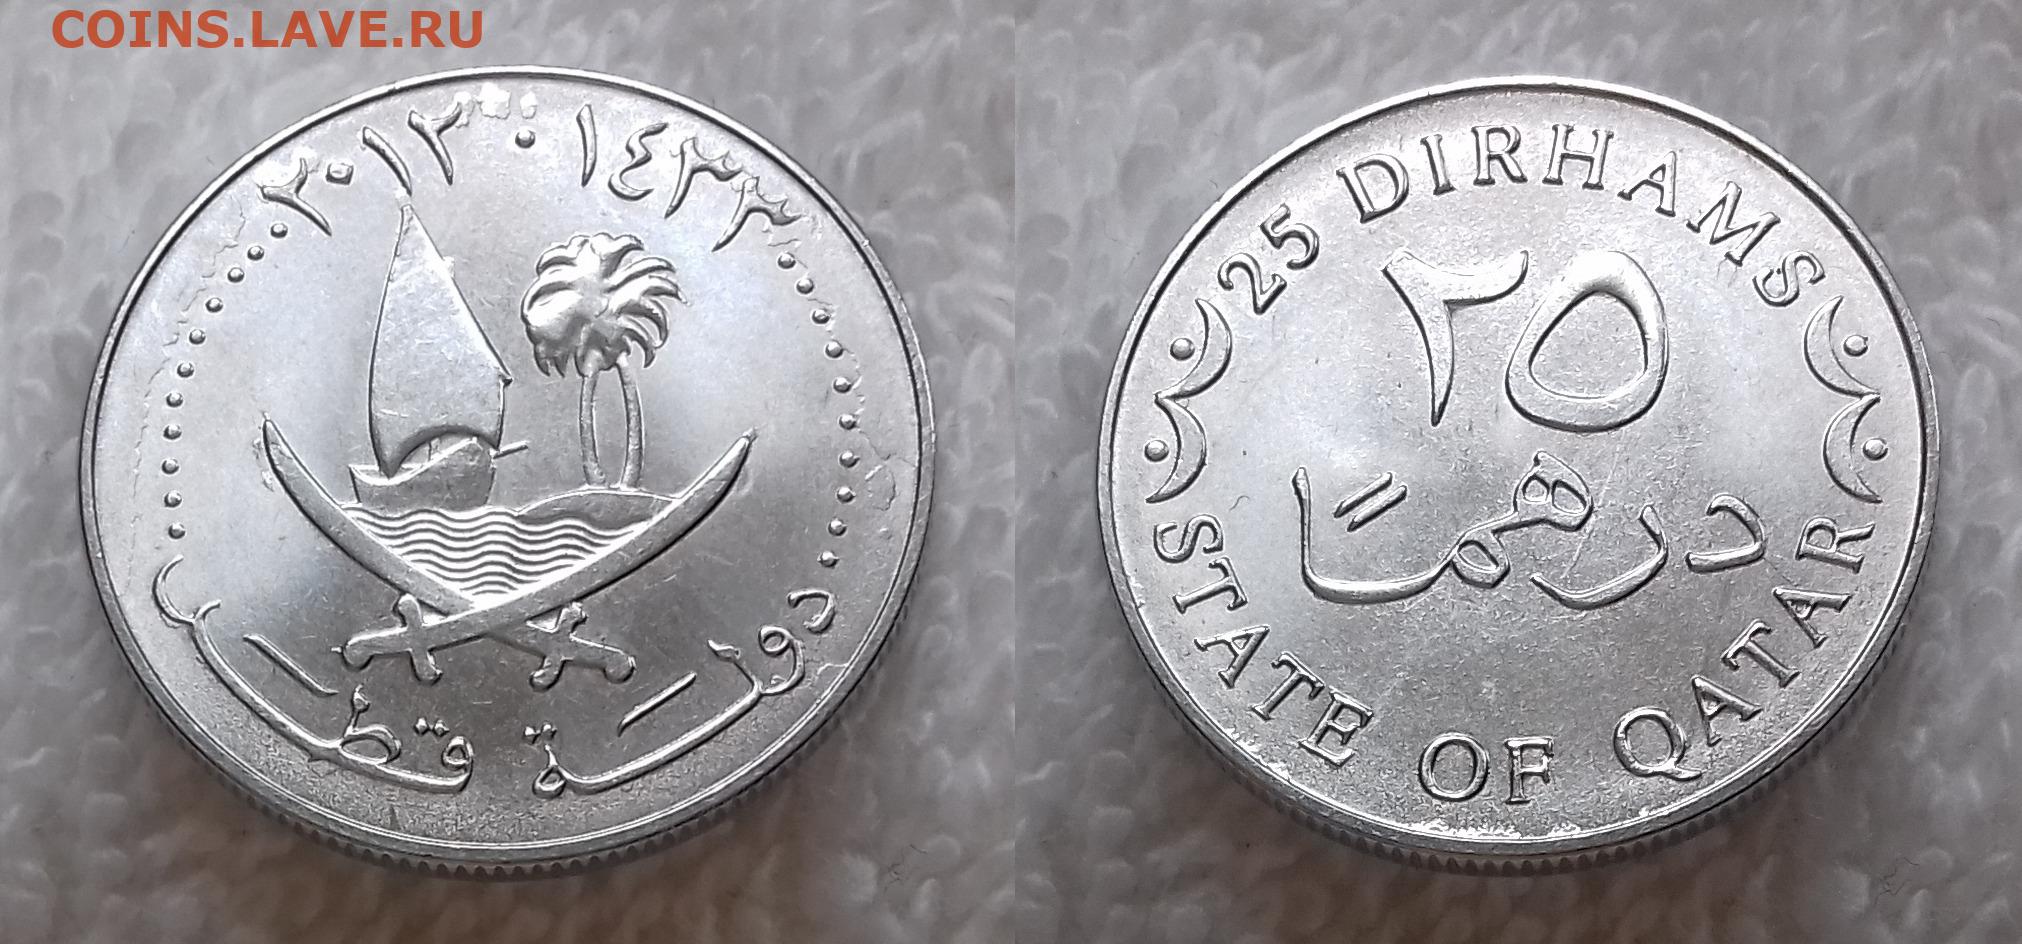 4500 дирхам. 25 Дирхамов. Дирхама монета 25. ОАЭ 1 дирхам 1986. Монета Катар 2 дирхама.